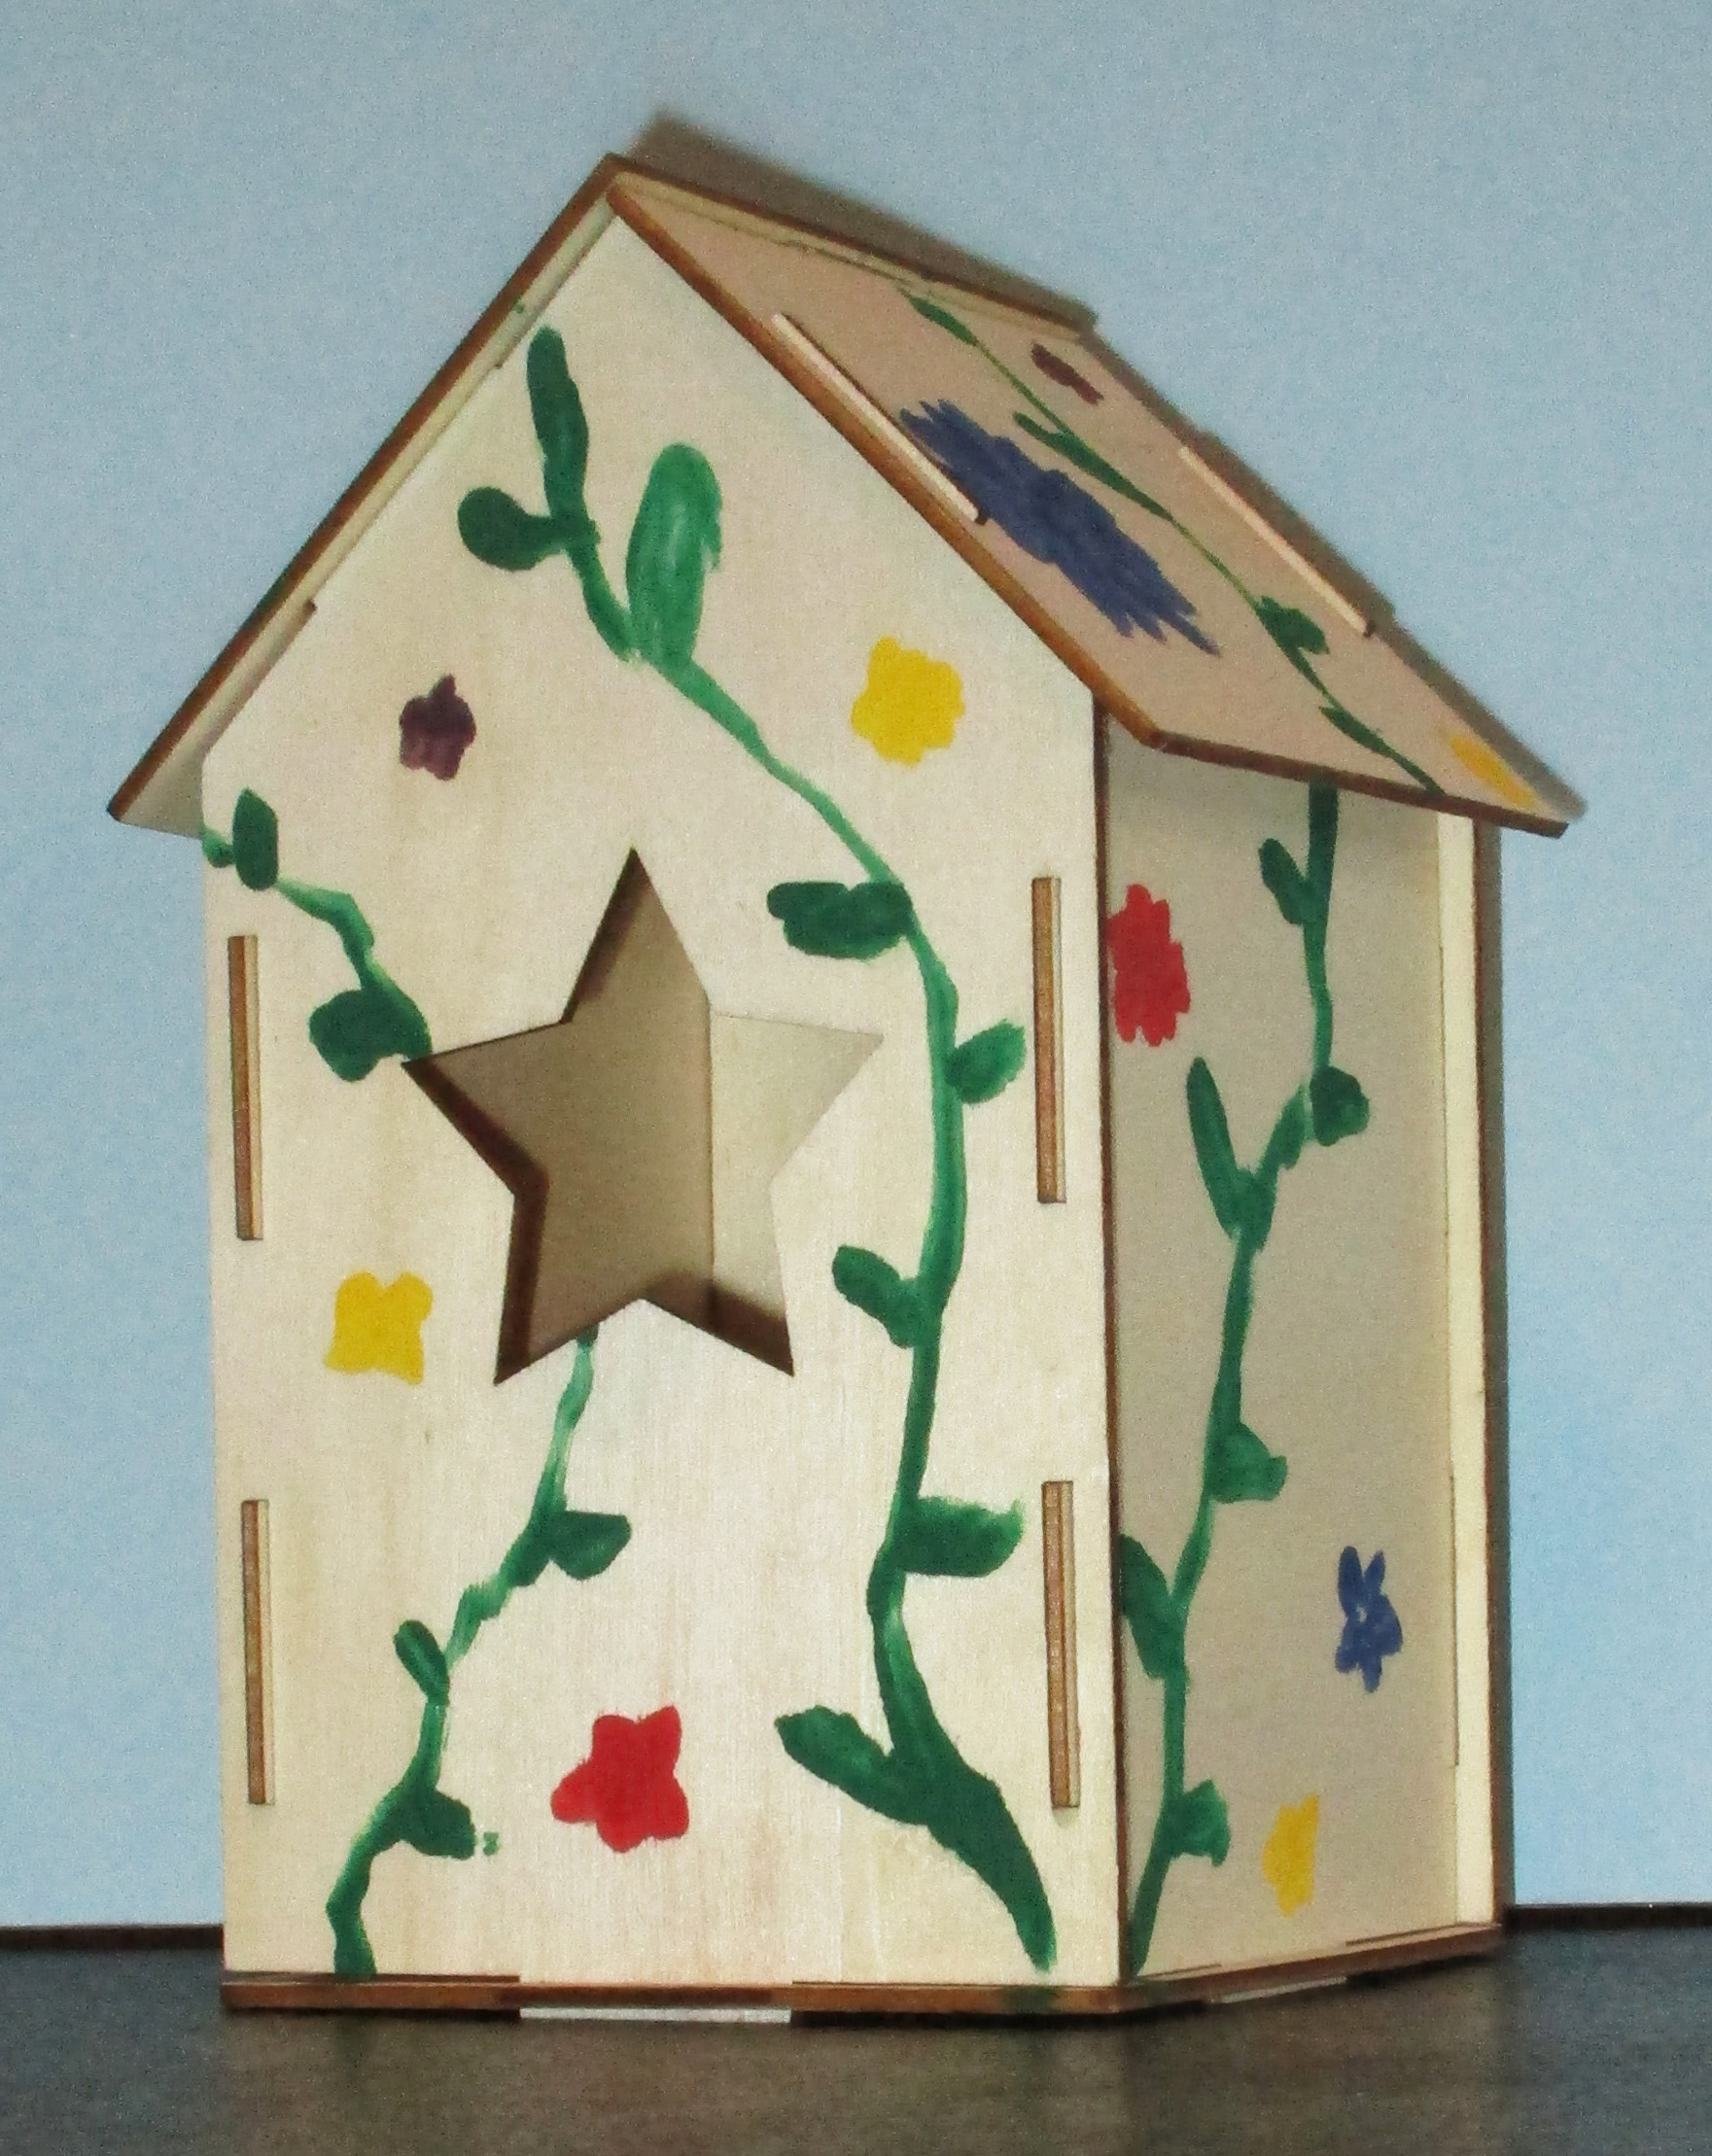 Painted birdhouse